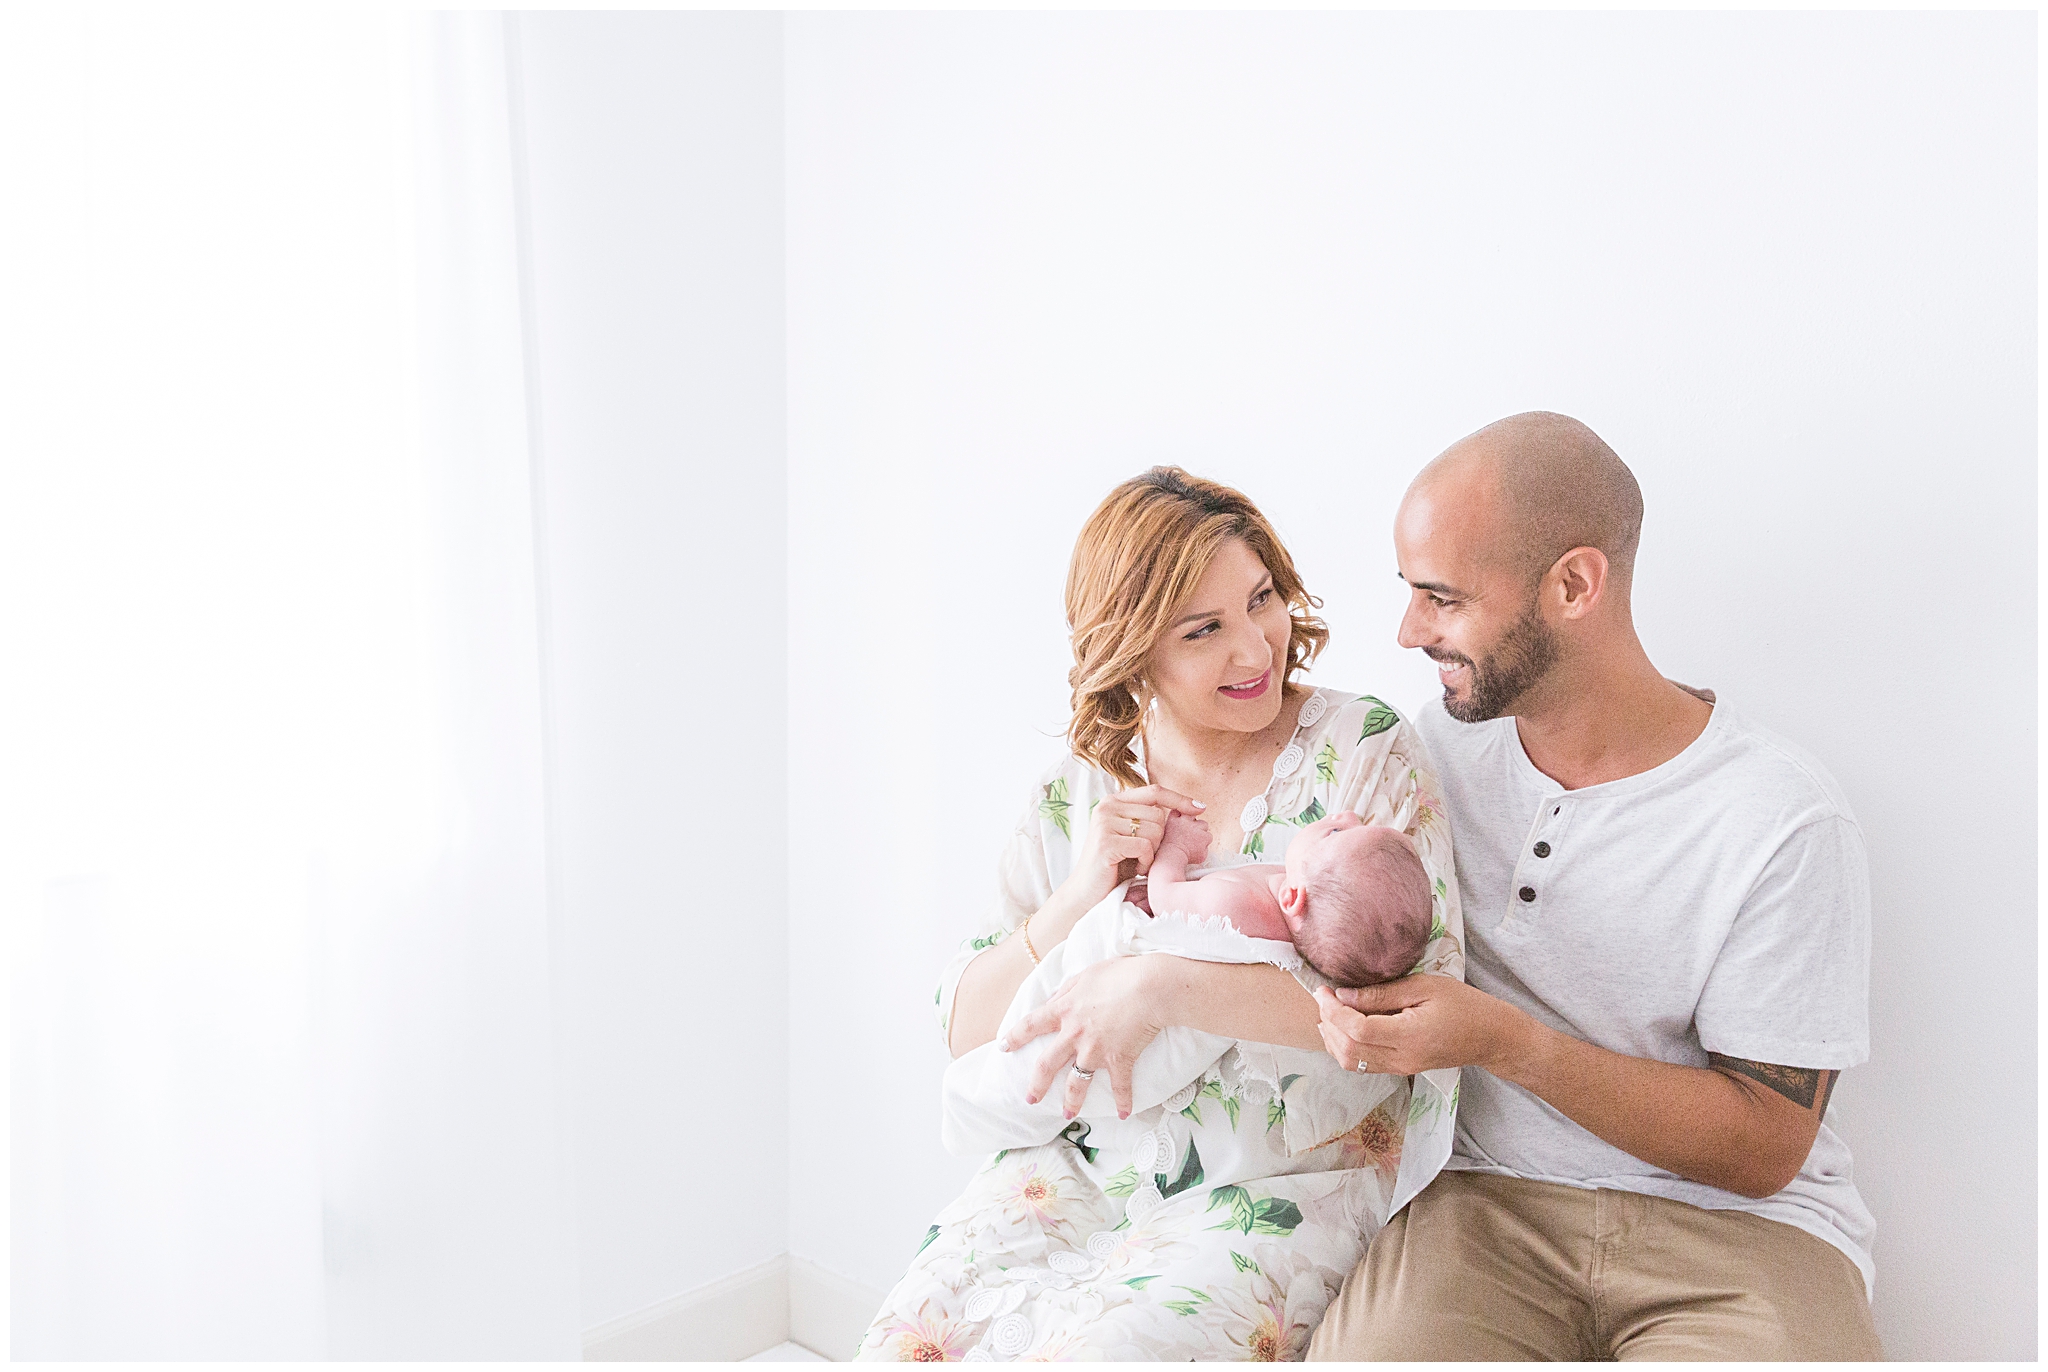 Family newborn photographer in photography studio | Miami, FL